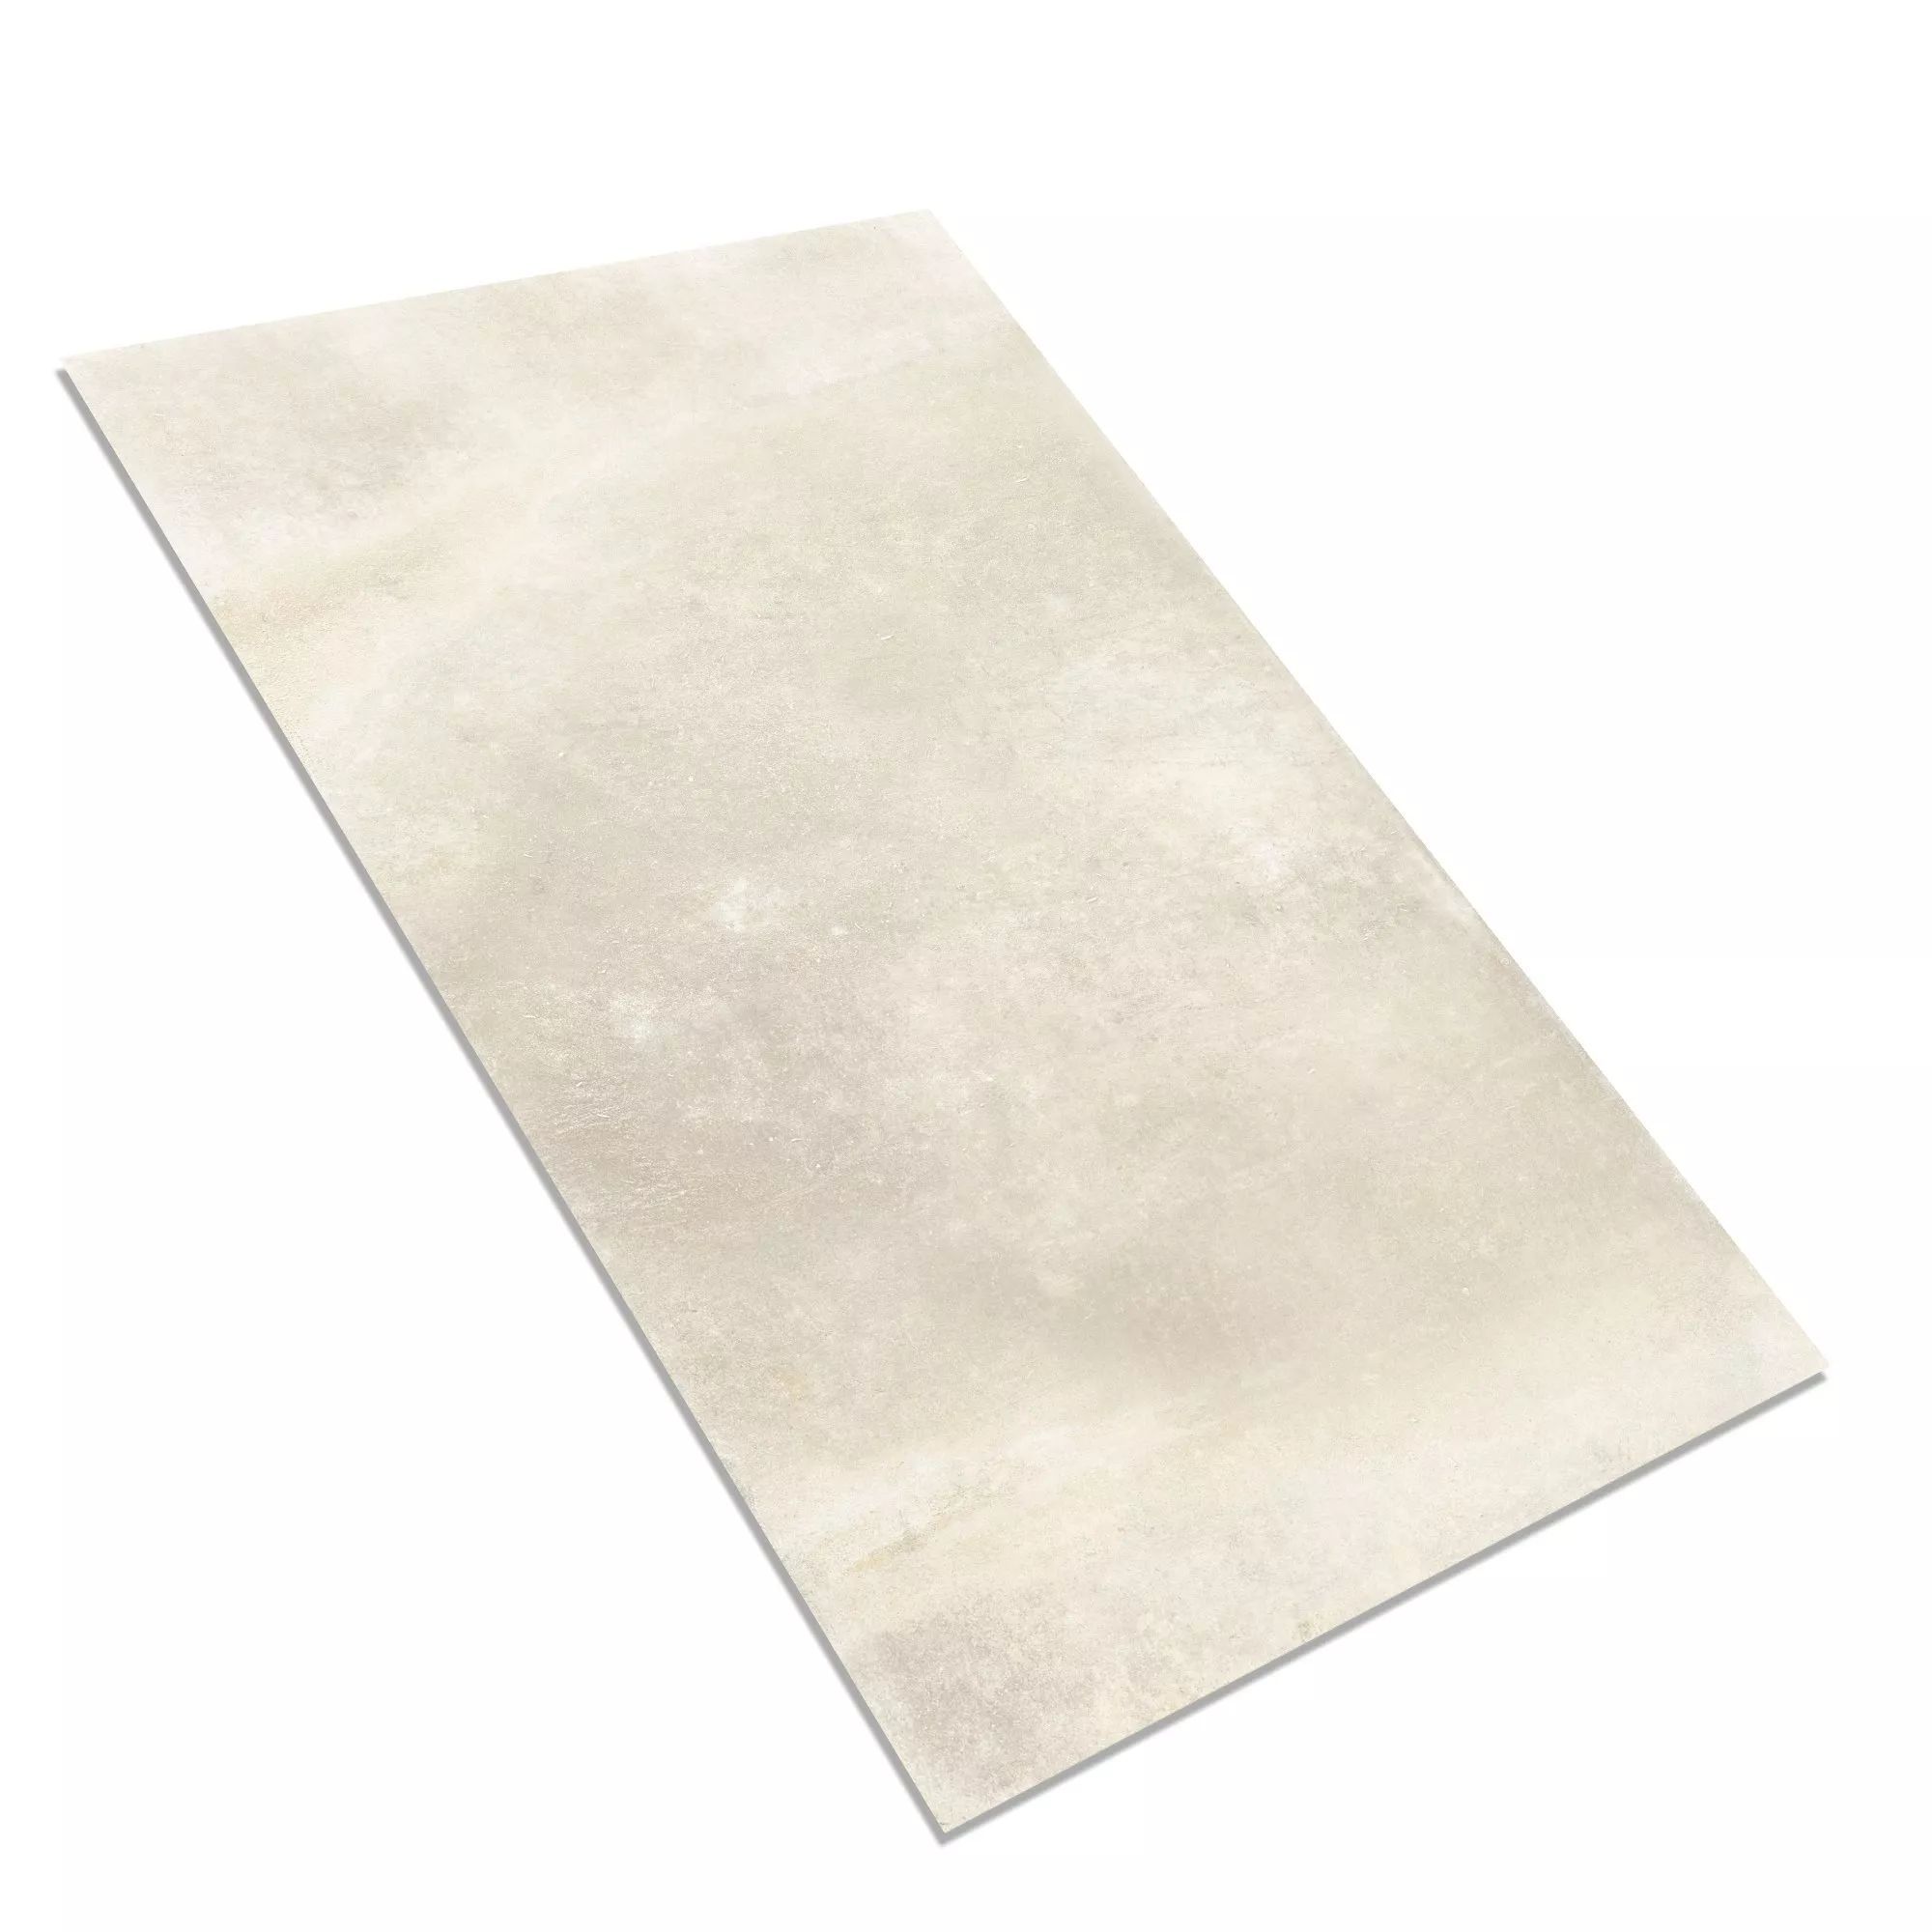 Sample Vloertegels Cement Optic Maryland Beige 30x60cm